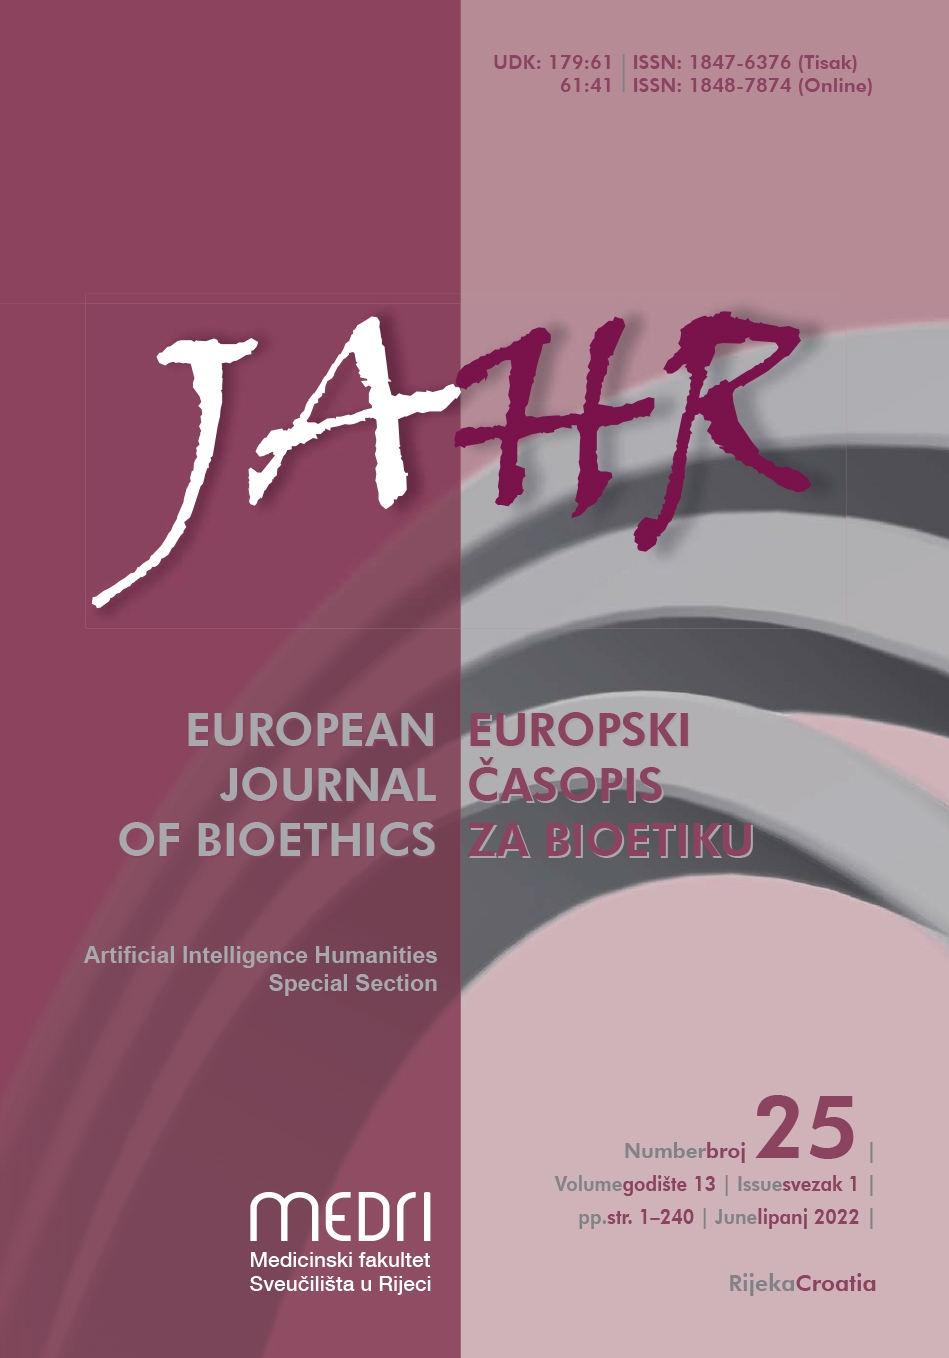 					View Vol. 13 No. 1 (2022): Jahr – European Journal of Bioethics
				